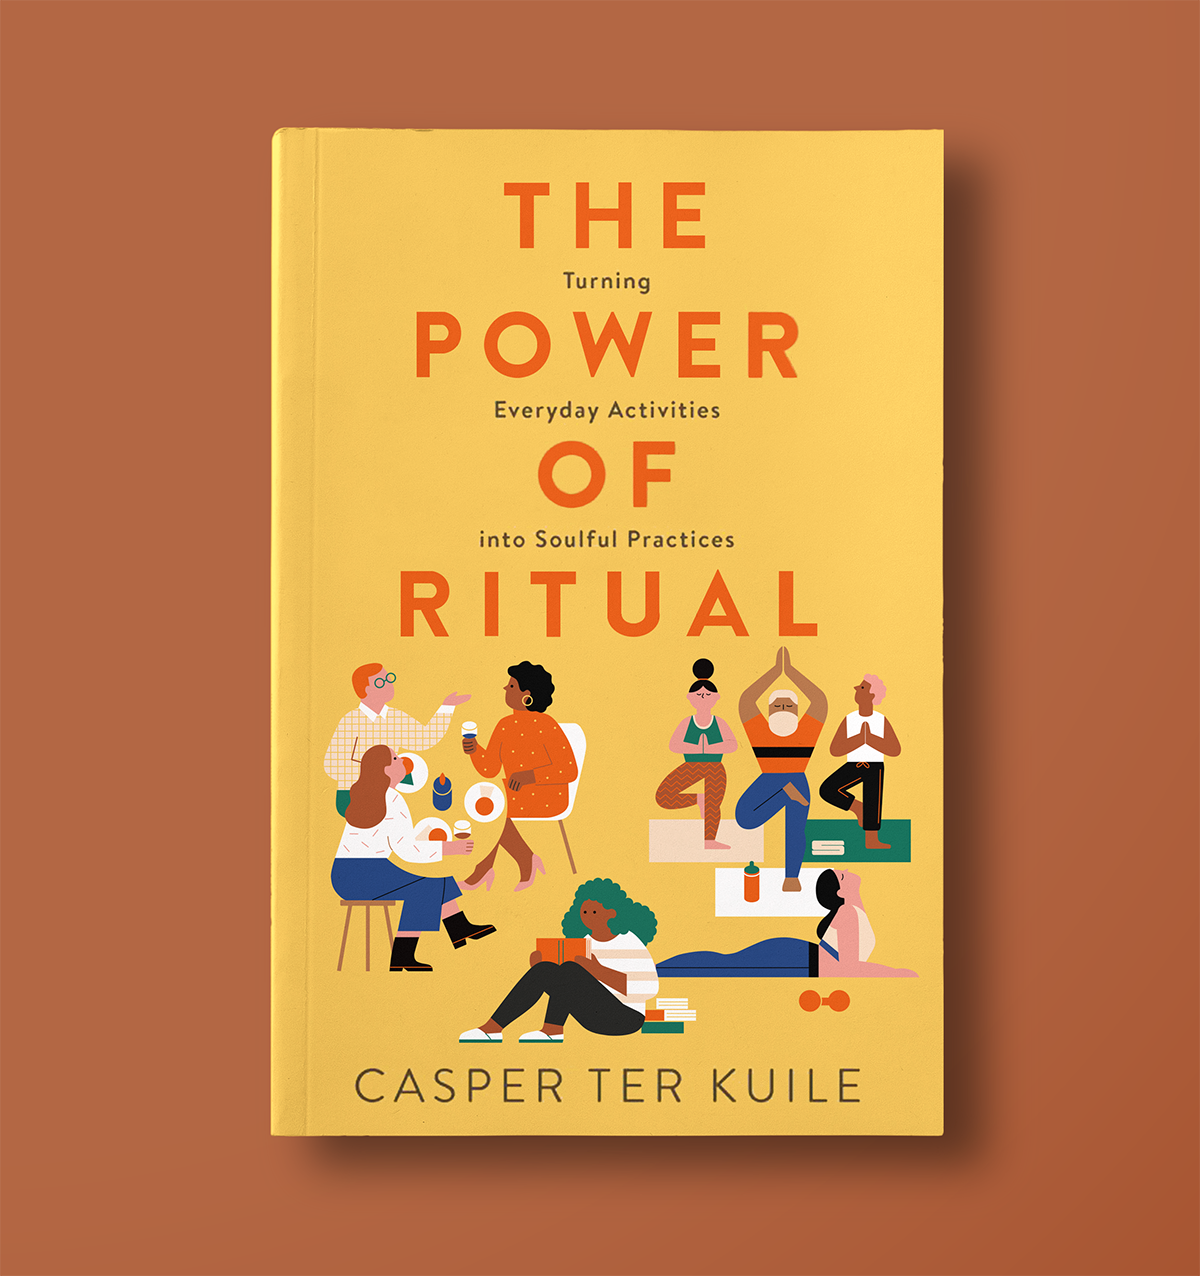 The Hidden Powers of Ritual